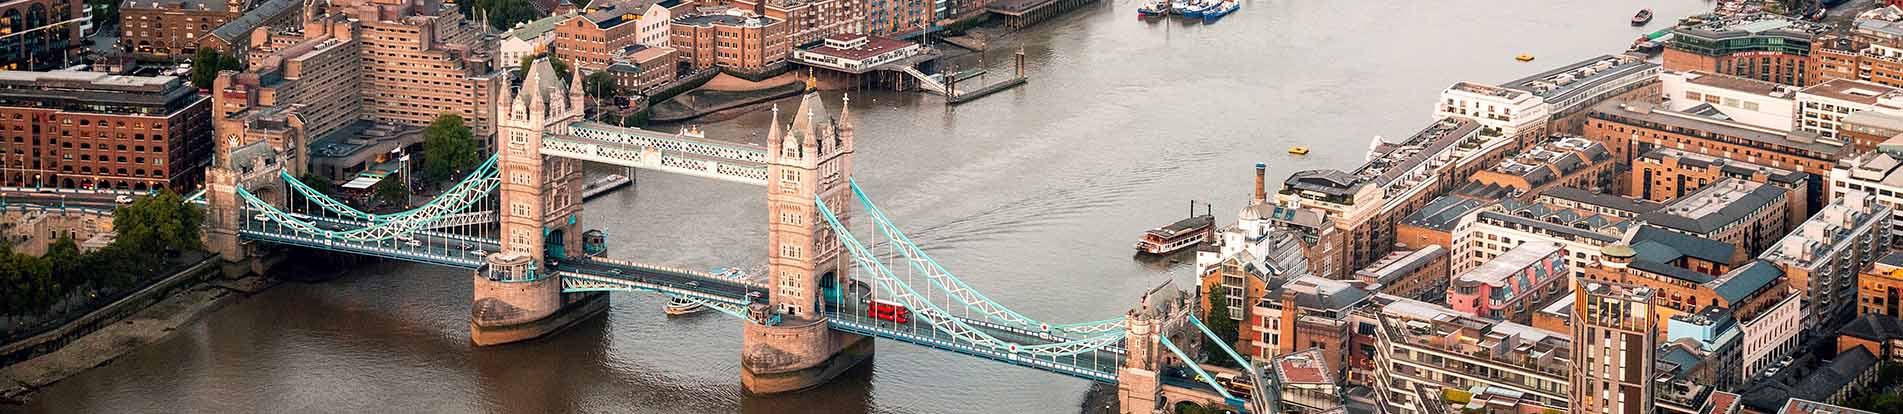 How to Make London Trip Memorable | London Travel Guide